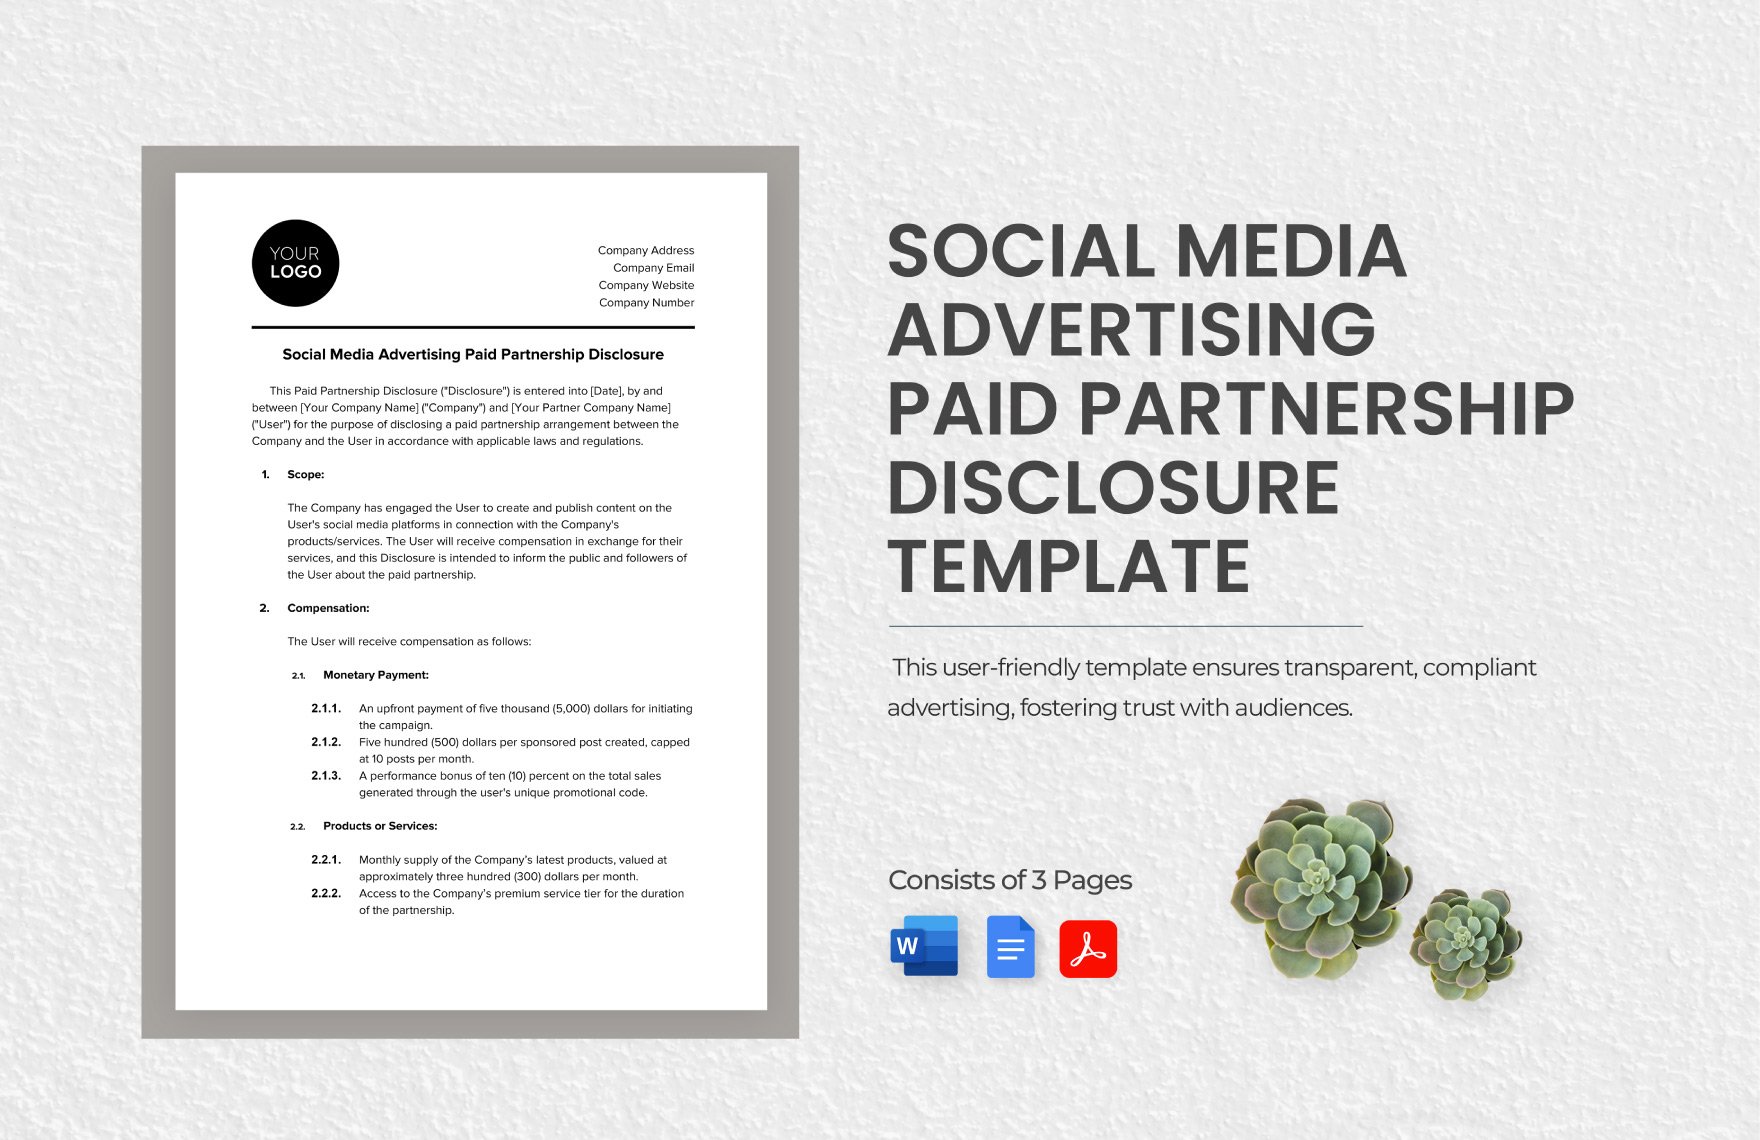 Social Media Advertising Paid Partnership Disclosure Template